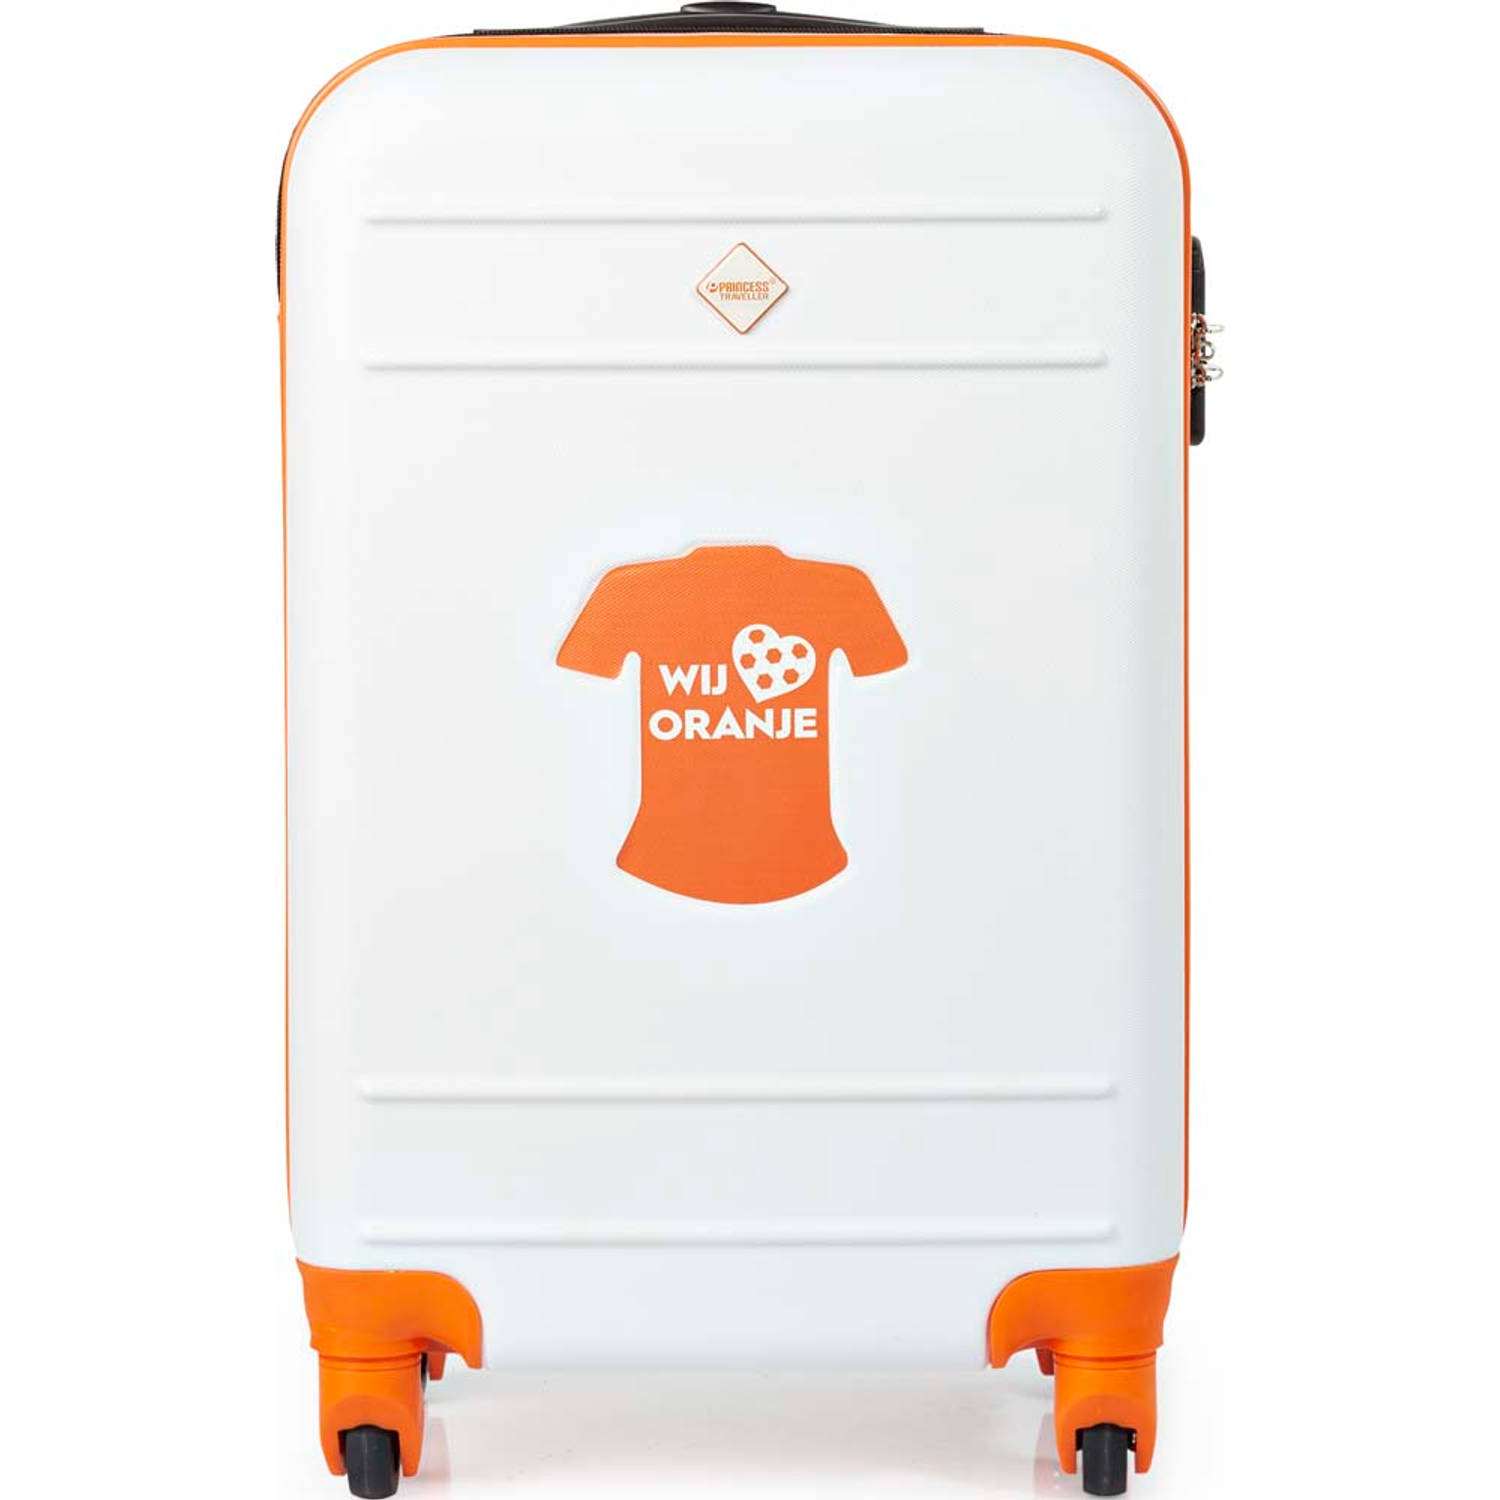 Aanstellen kleermaker Botanist Princess Traveller Oranje koffer - ABS - S | Blokker